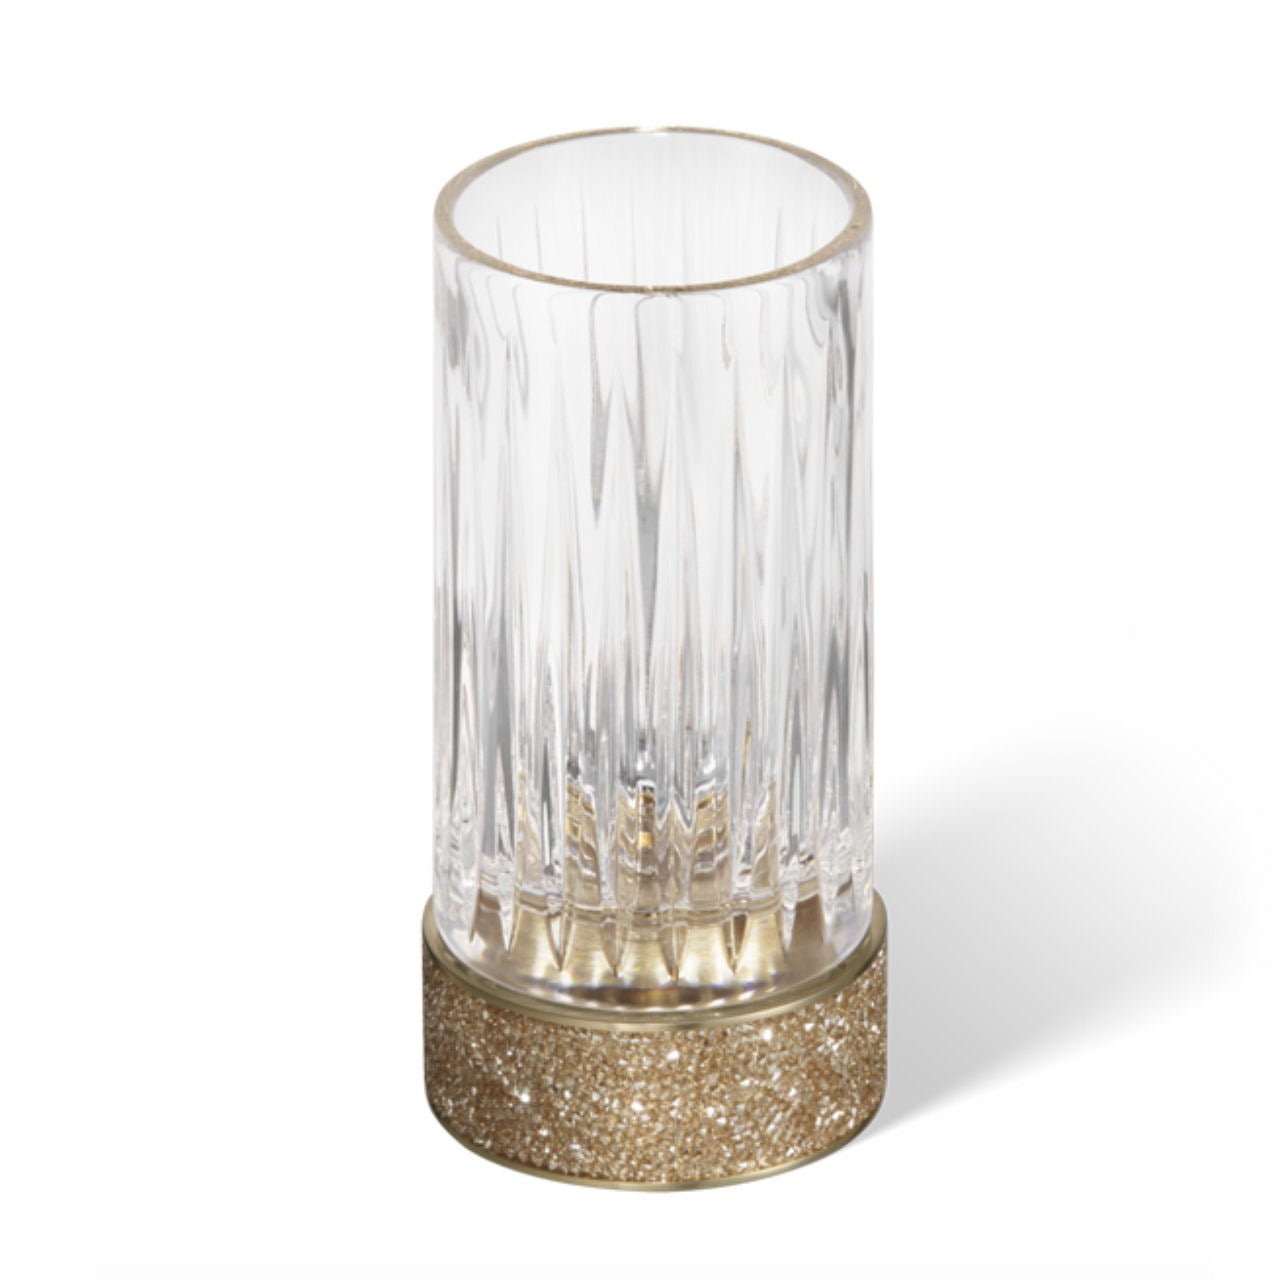 Matt Gold Tumbler Holder with Swarowski® Crystals - |VESIMI Design|